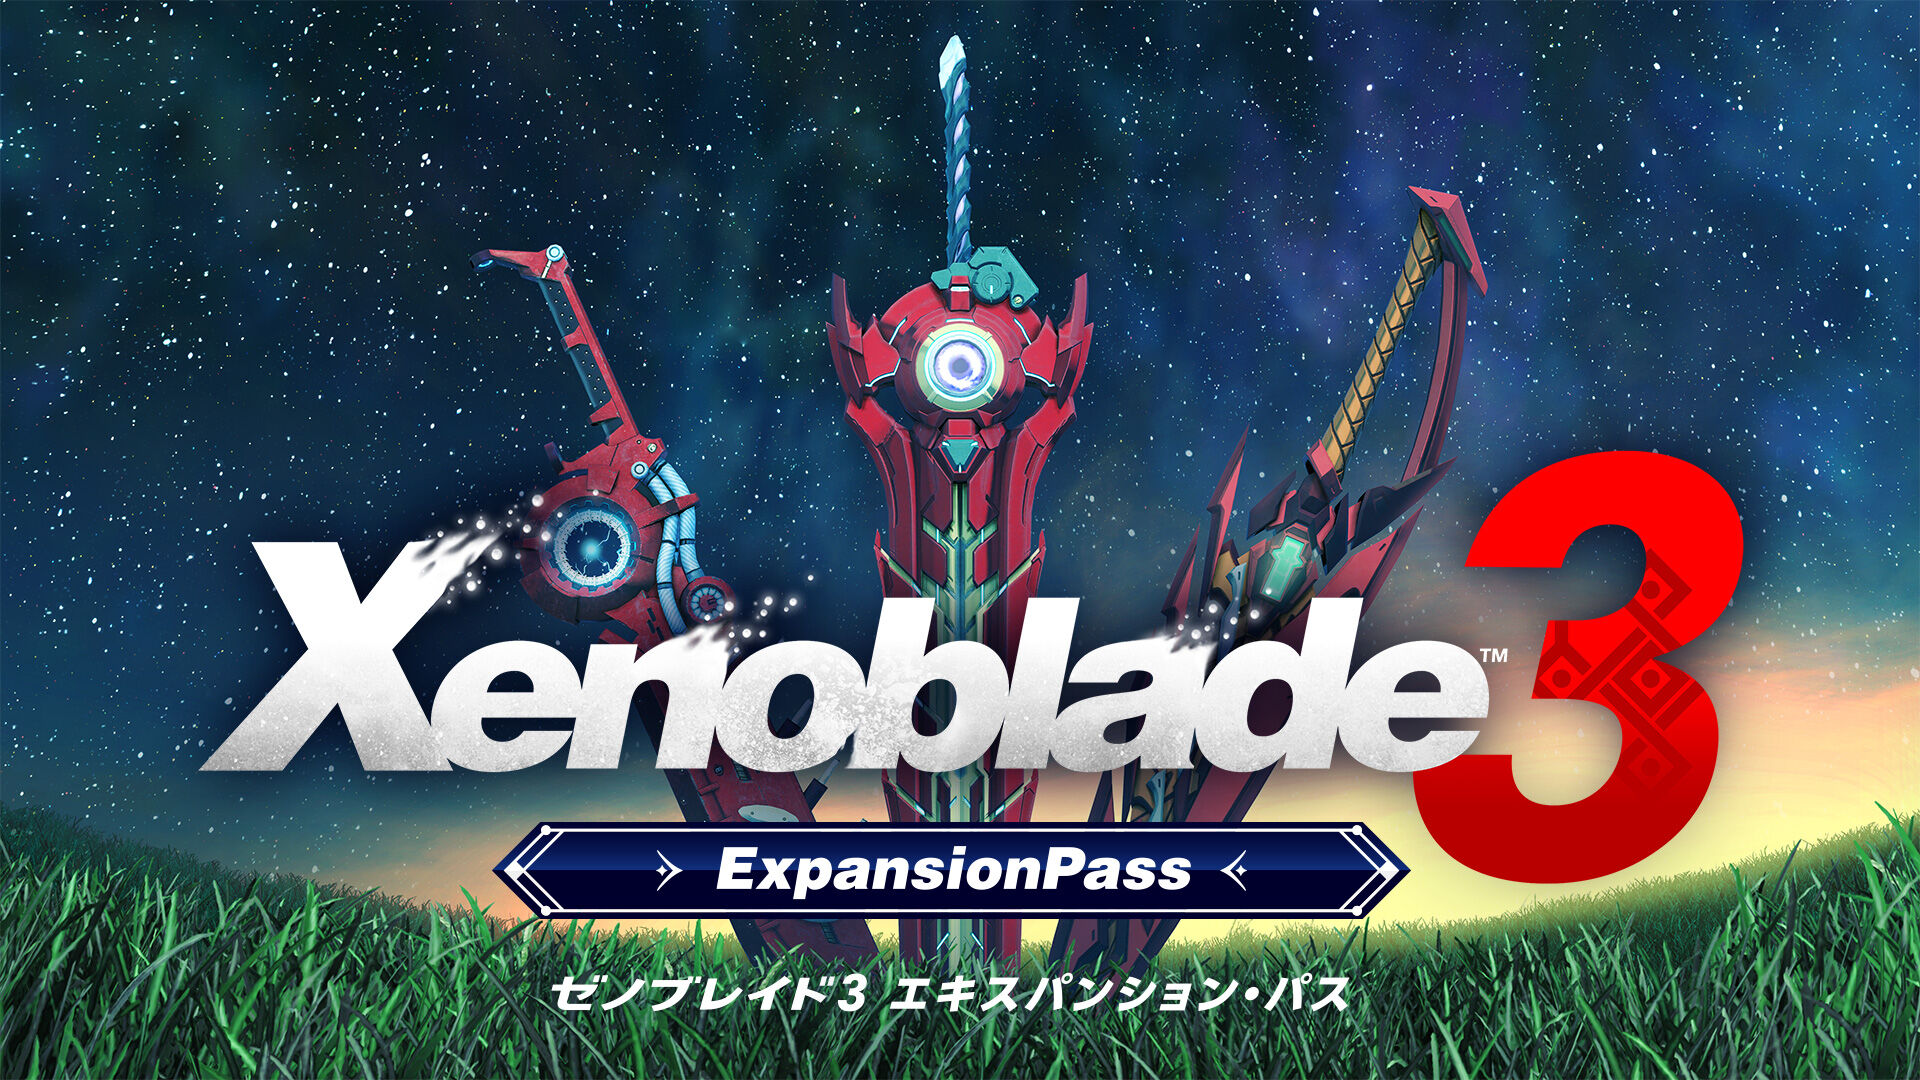 Xenoblade3 Collector's Edition（ゲームカードなし）※特典のみ | My 